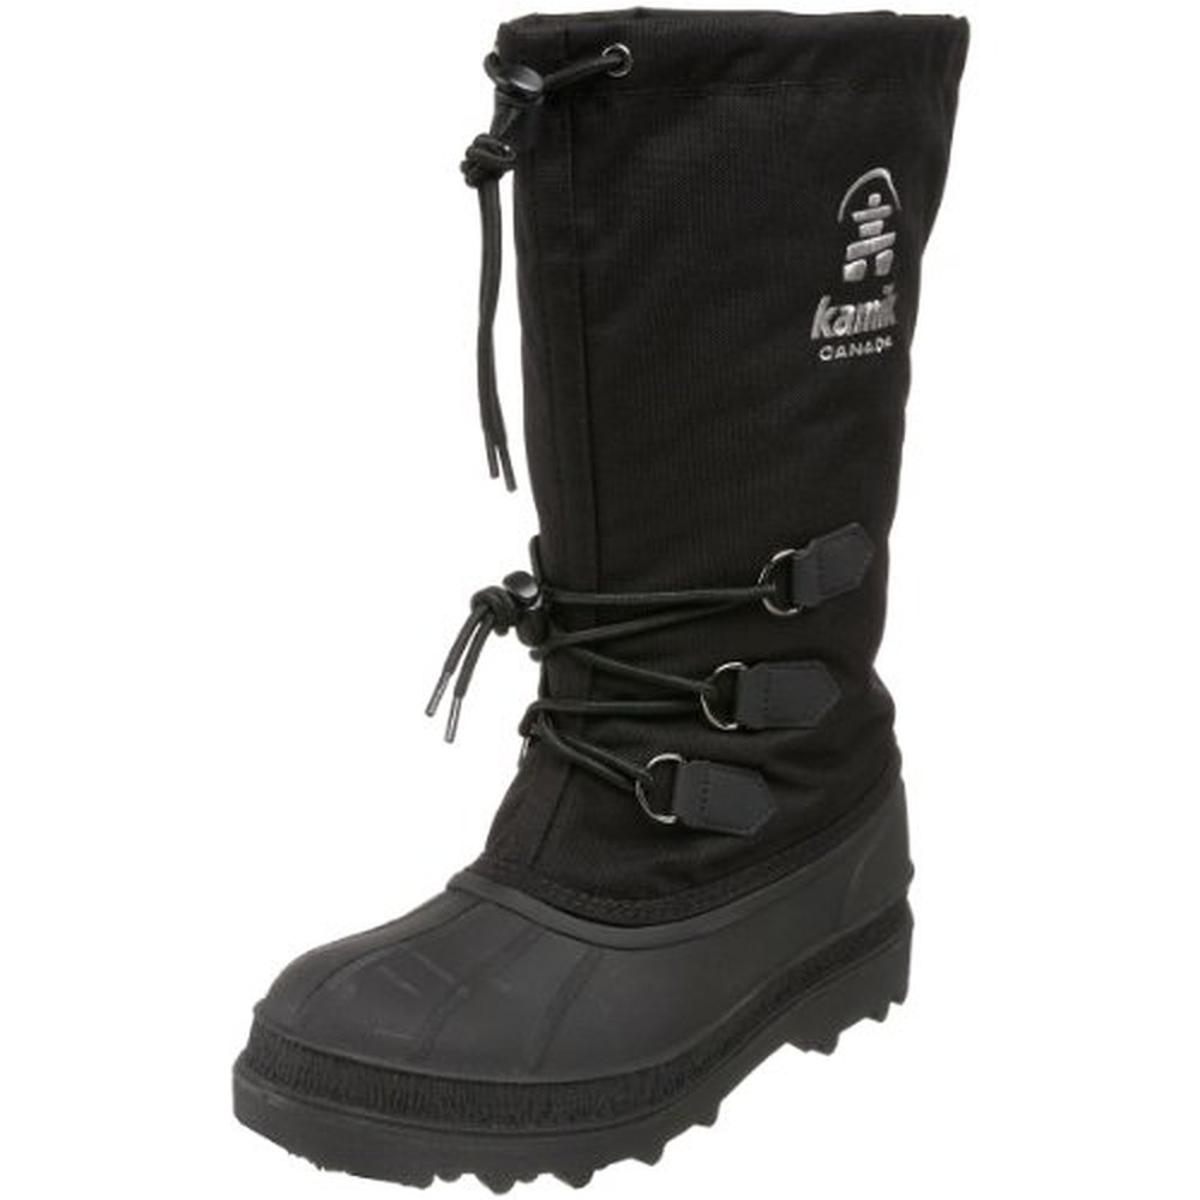 Kamik 5402 Womens Canuck Black Waterproof Mid-Calf Winter Snow Boots 11 ...